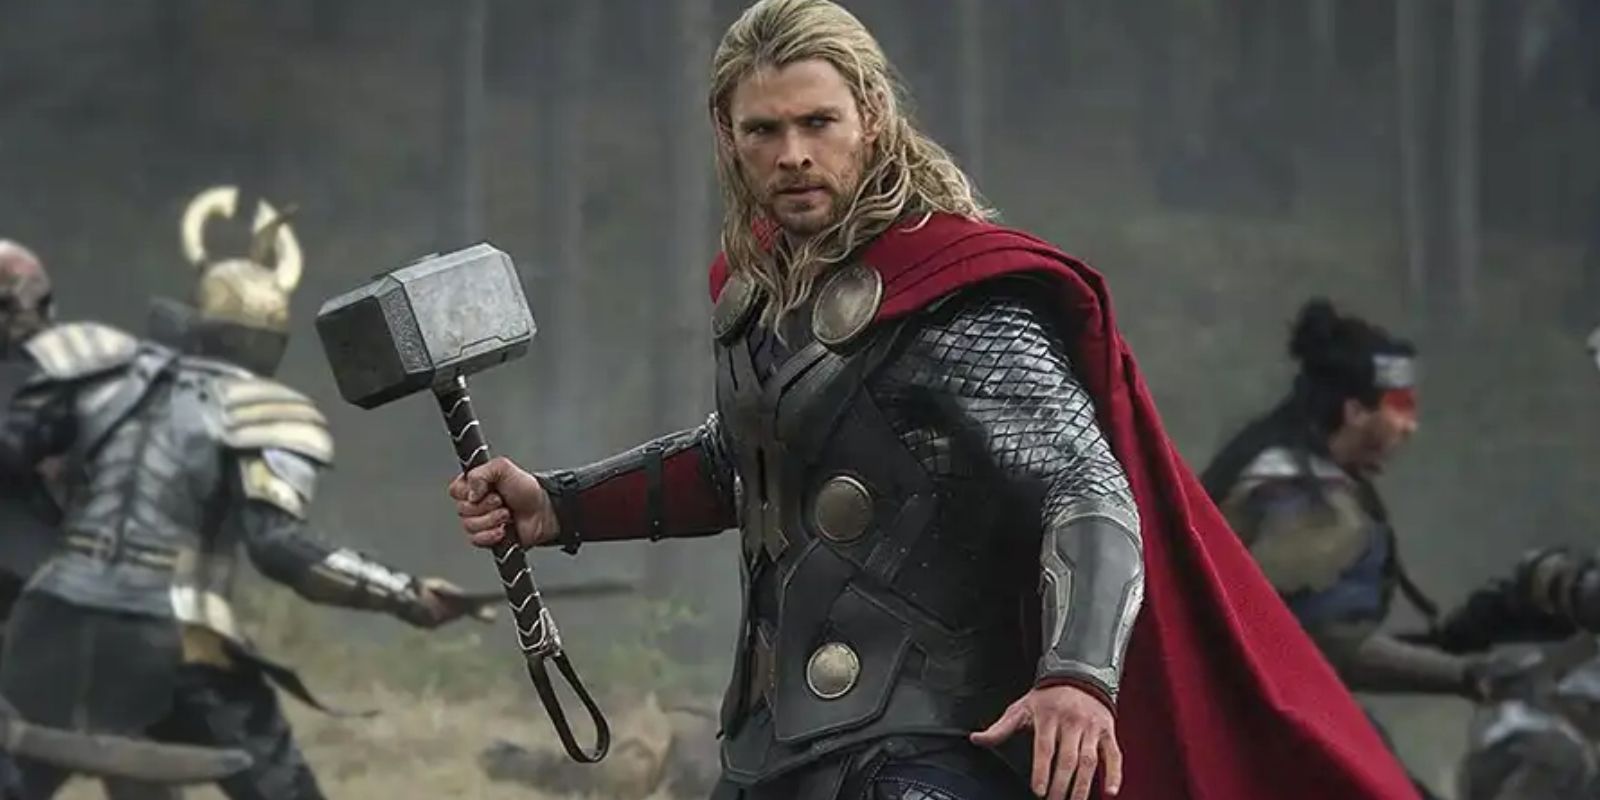 Thor wielding mjolnir in battle in his first movie